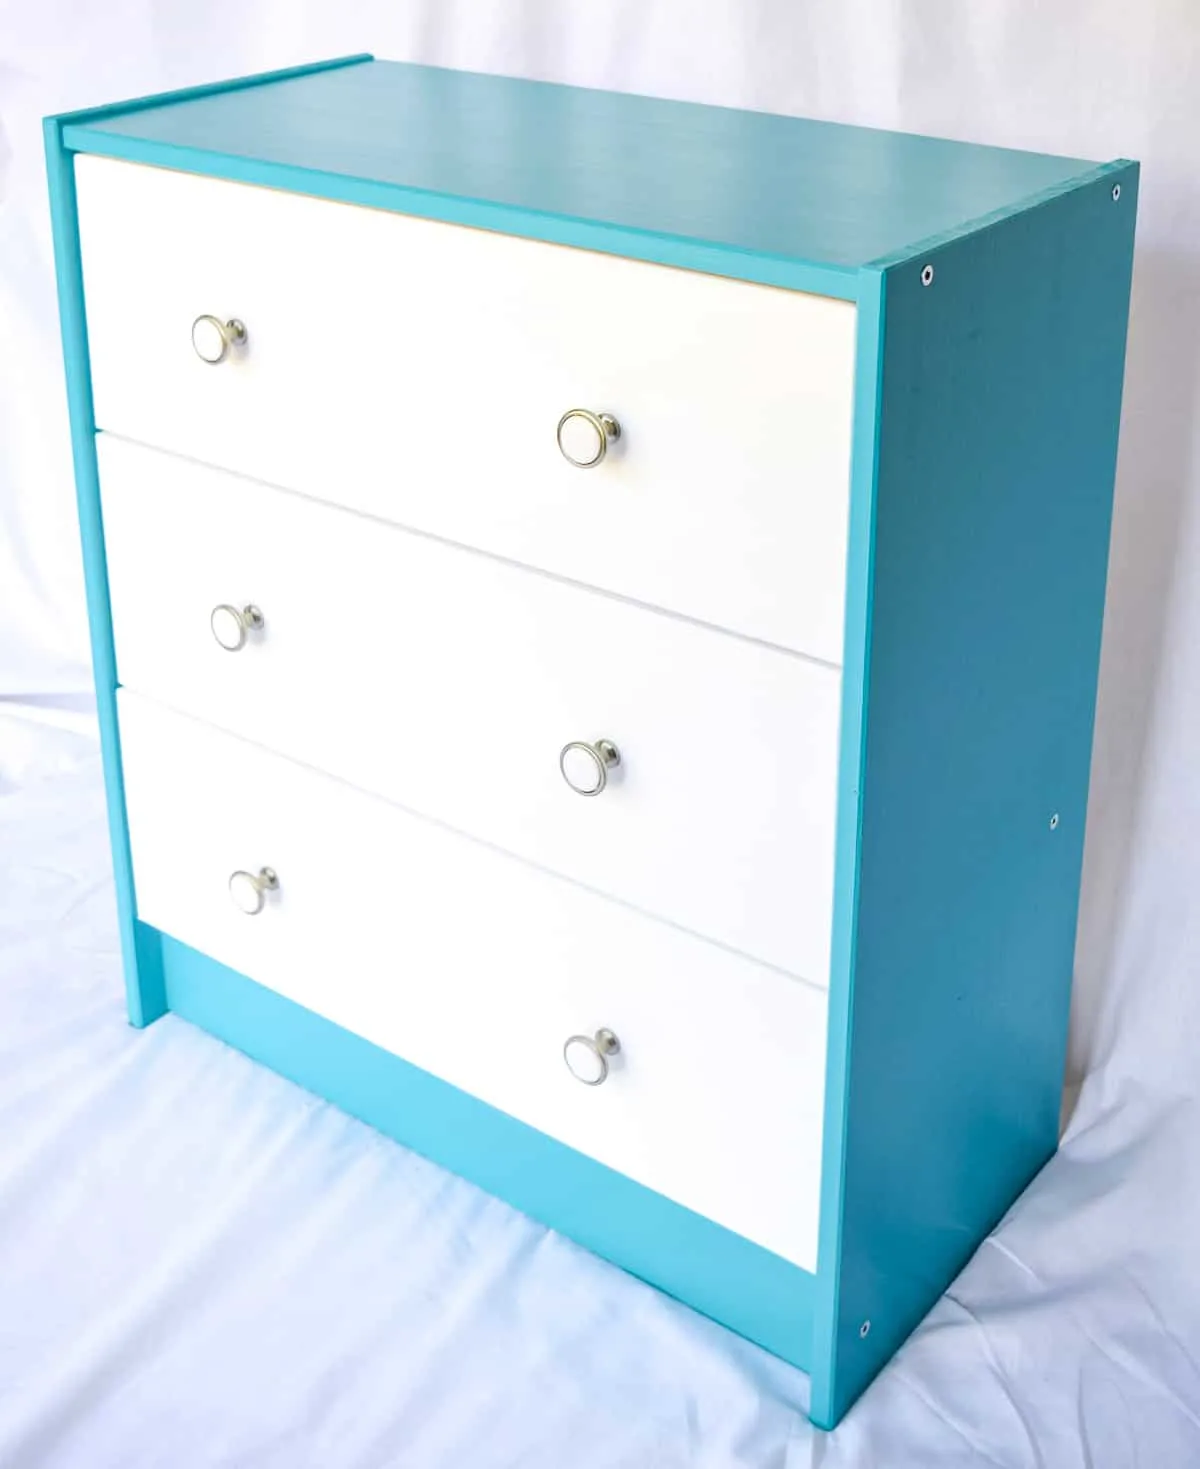 IKEA Rast dresser painted blue and white to match the IKEA Kallax unit